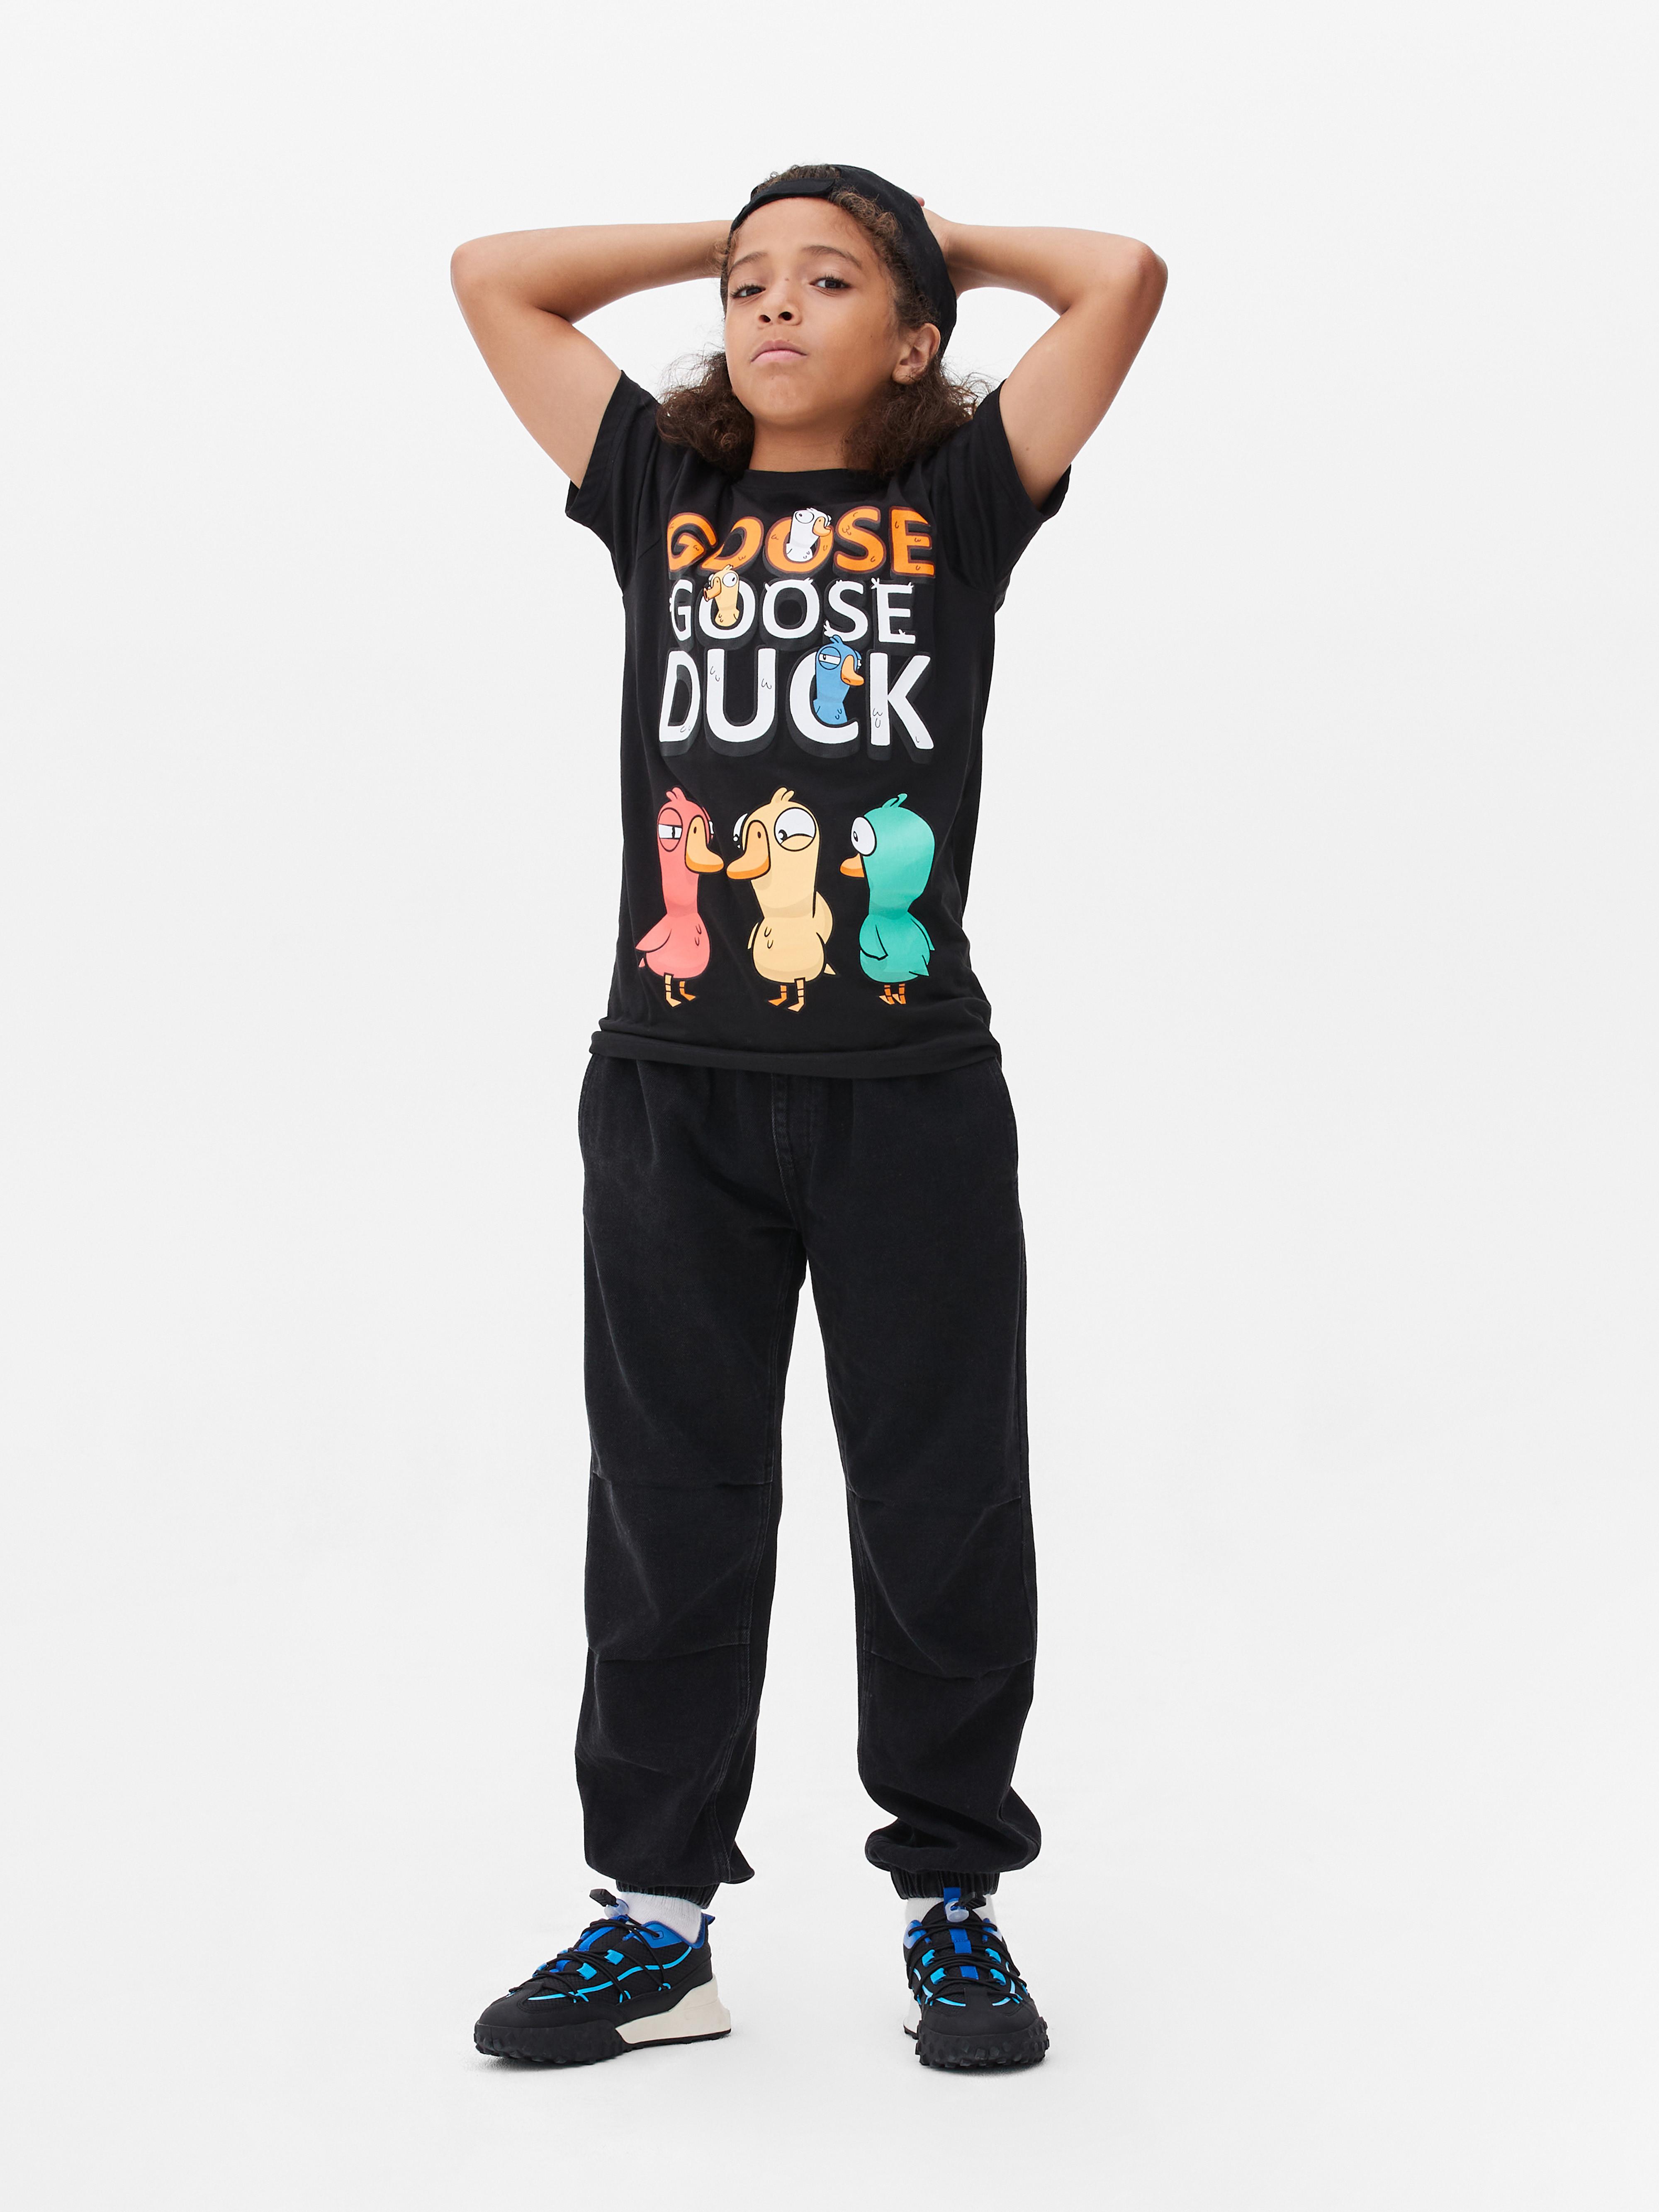 T-shirt Goose Goose Duck